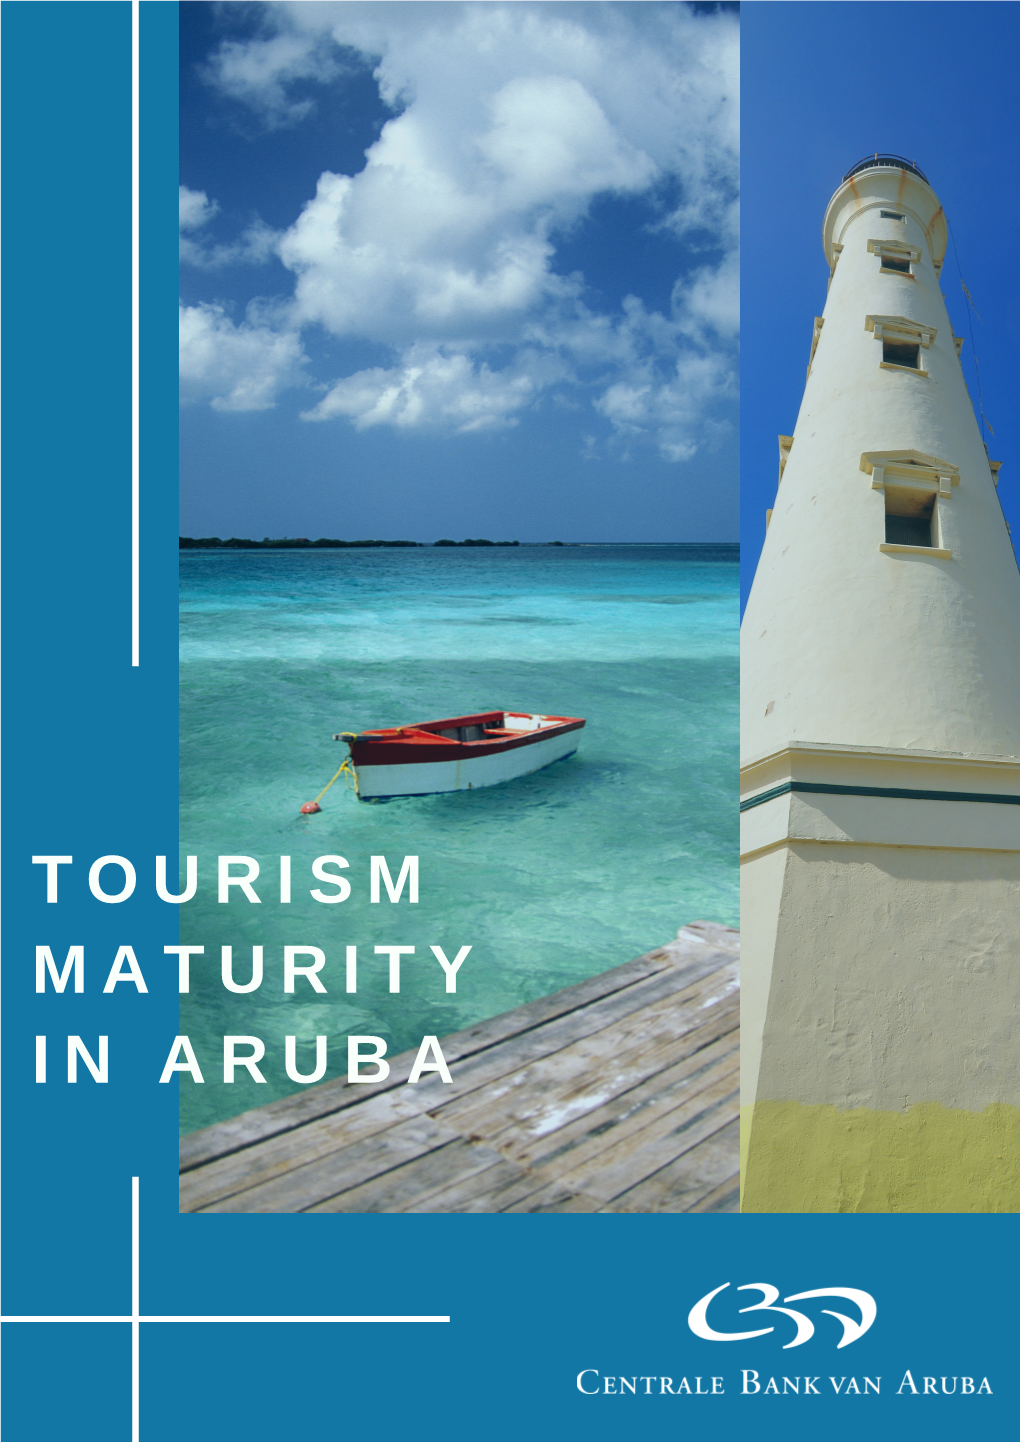 Tourism Maturity in Aruba1